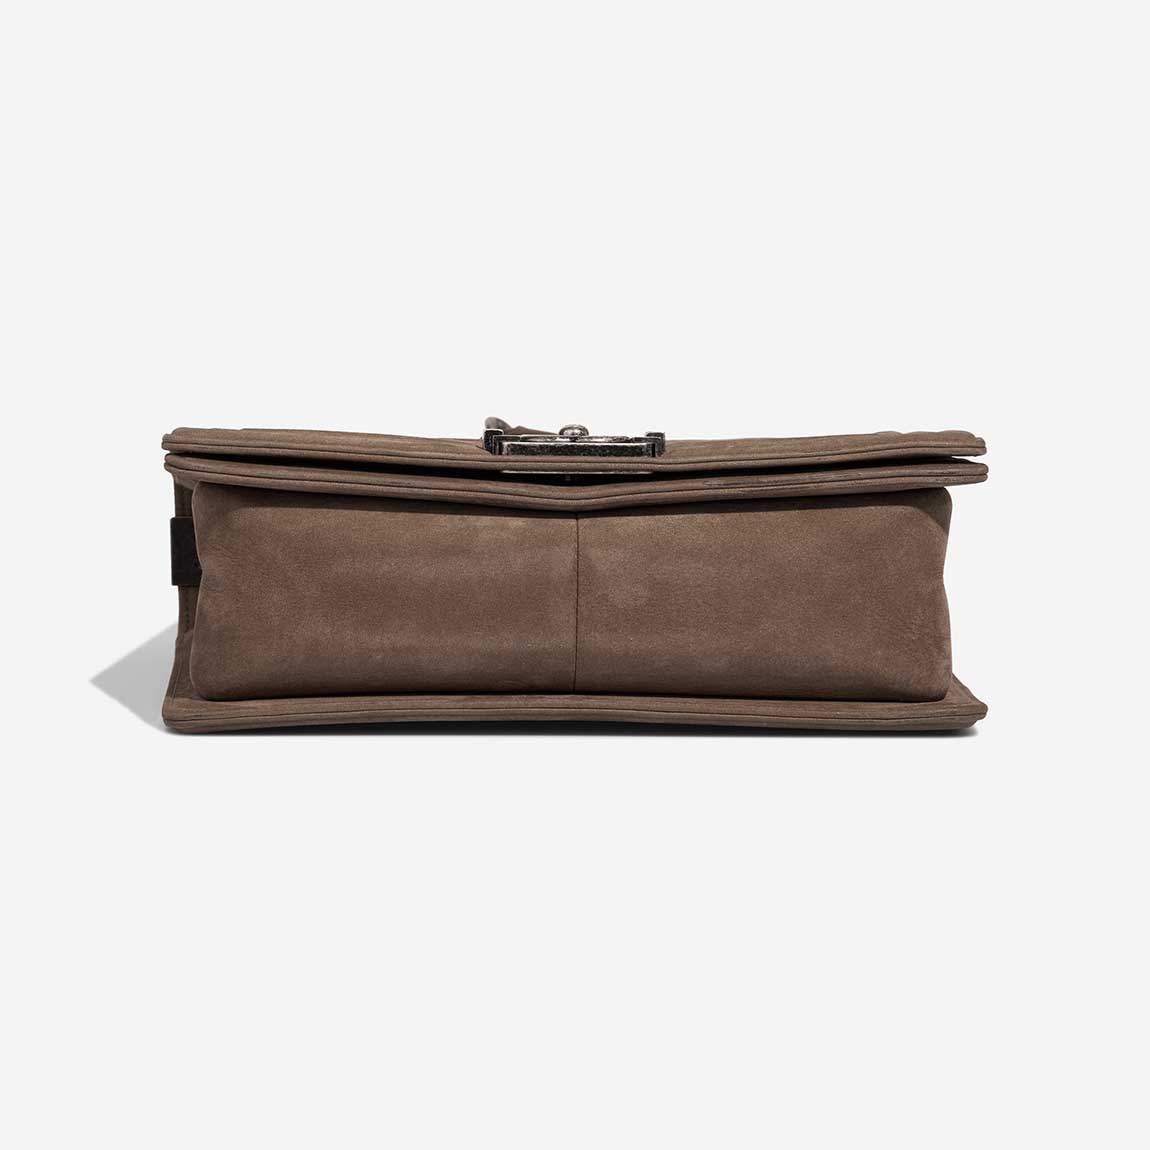 Chanel Boy Old Medium Suede Brown | Sell your designer bag